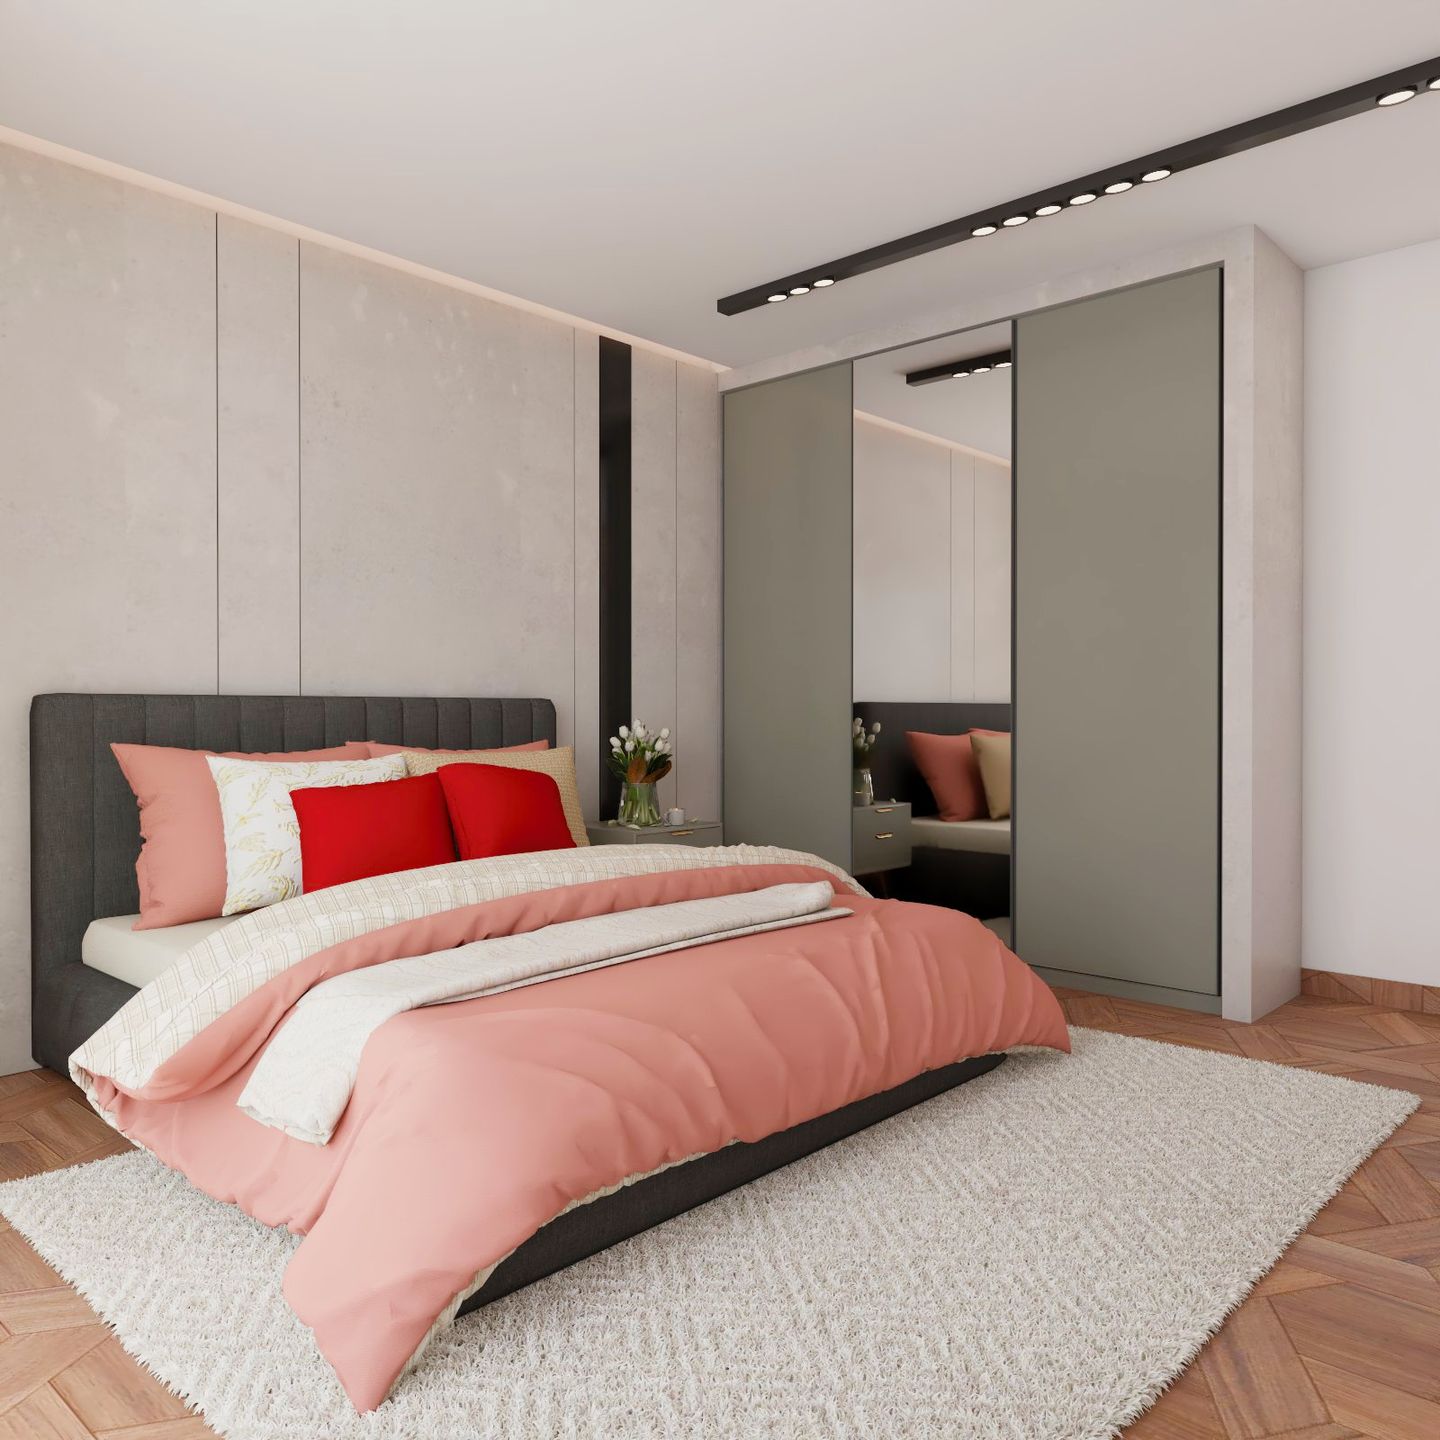 3-Door Sliding Wardrobe Design With A Mirror And In Grey Tones - Livspace